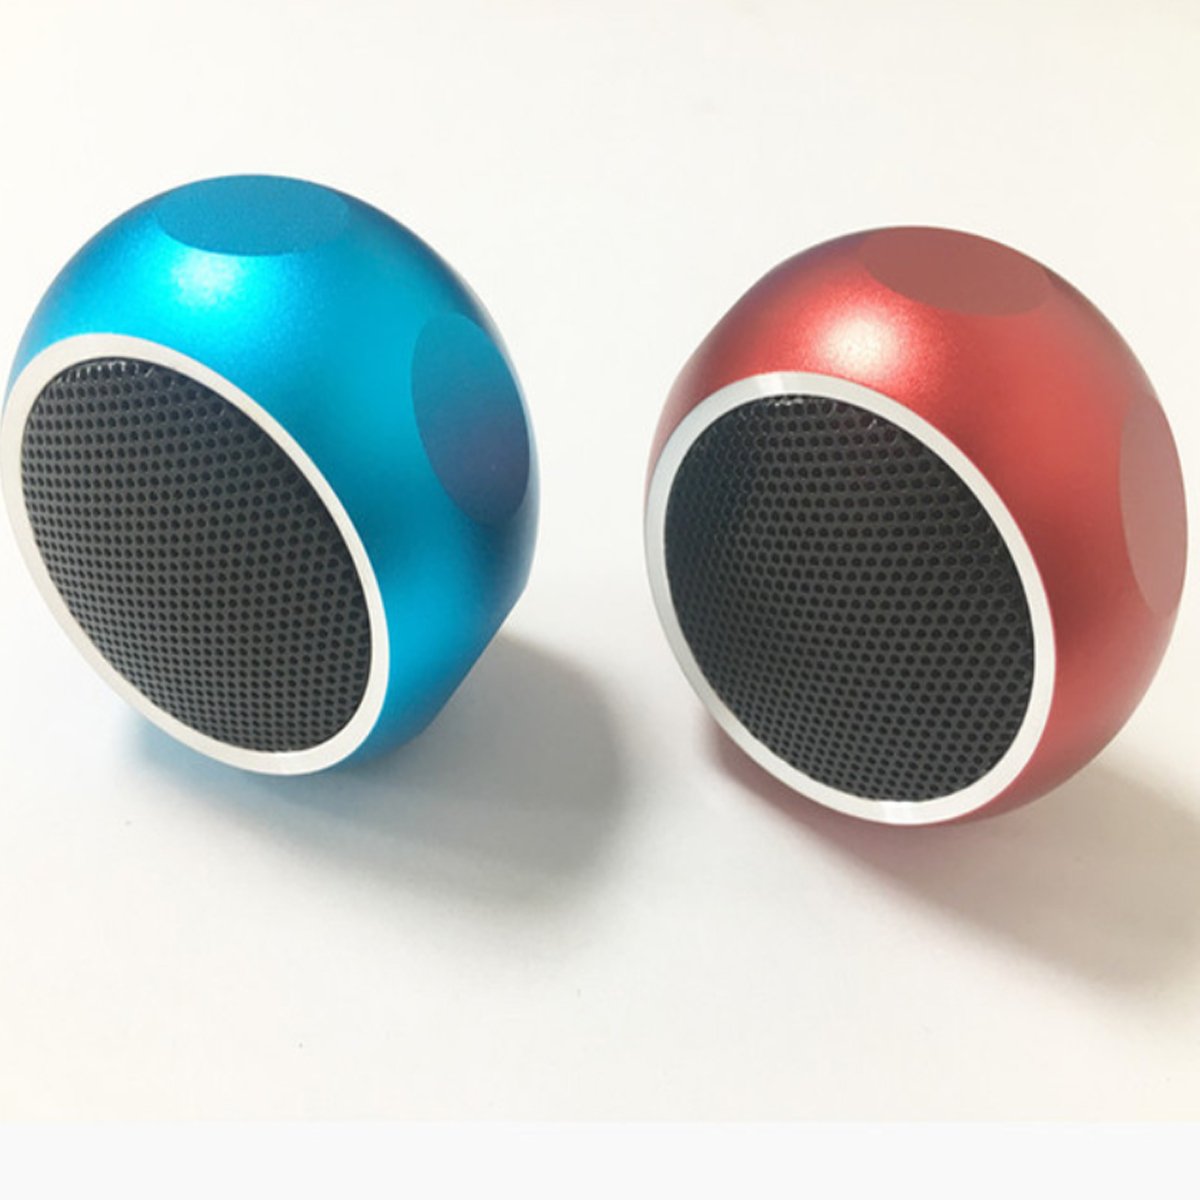 Big Sound Mini Speakers In 5 Colors - 17_1c144163-76ae-4757-b0c2-9511e1f78314